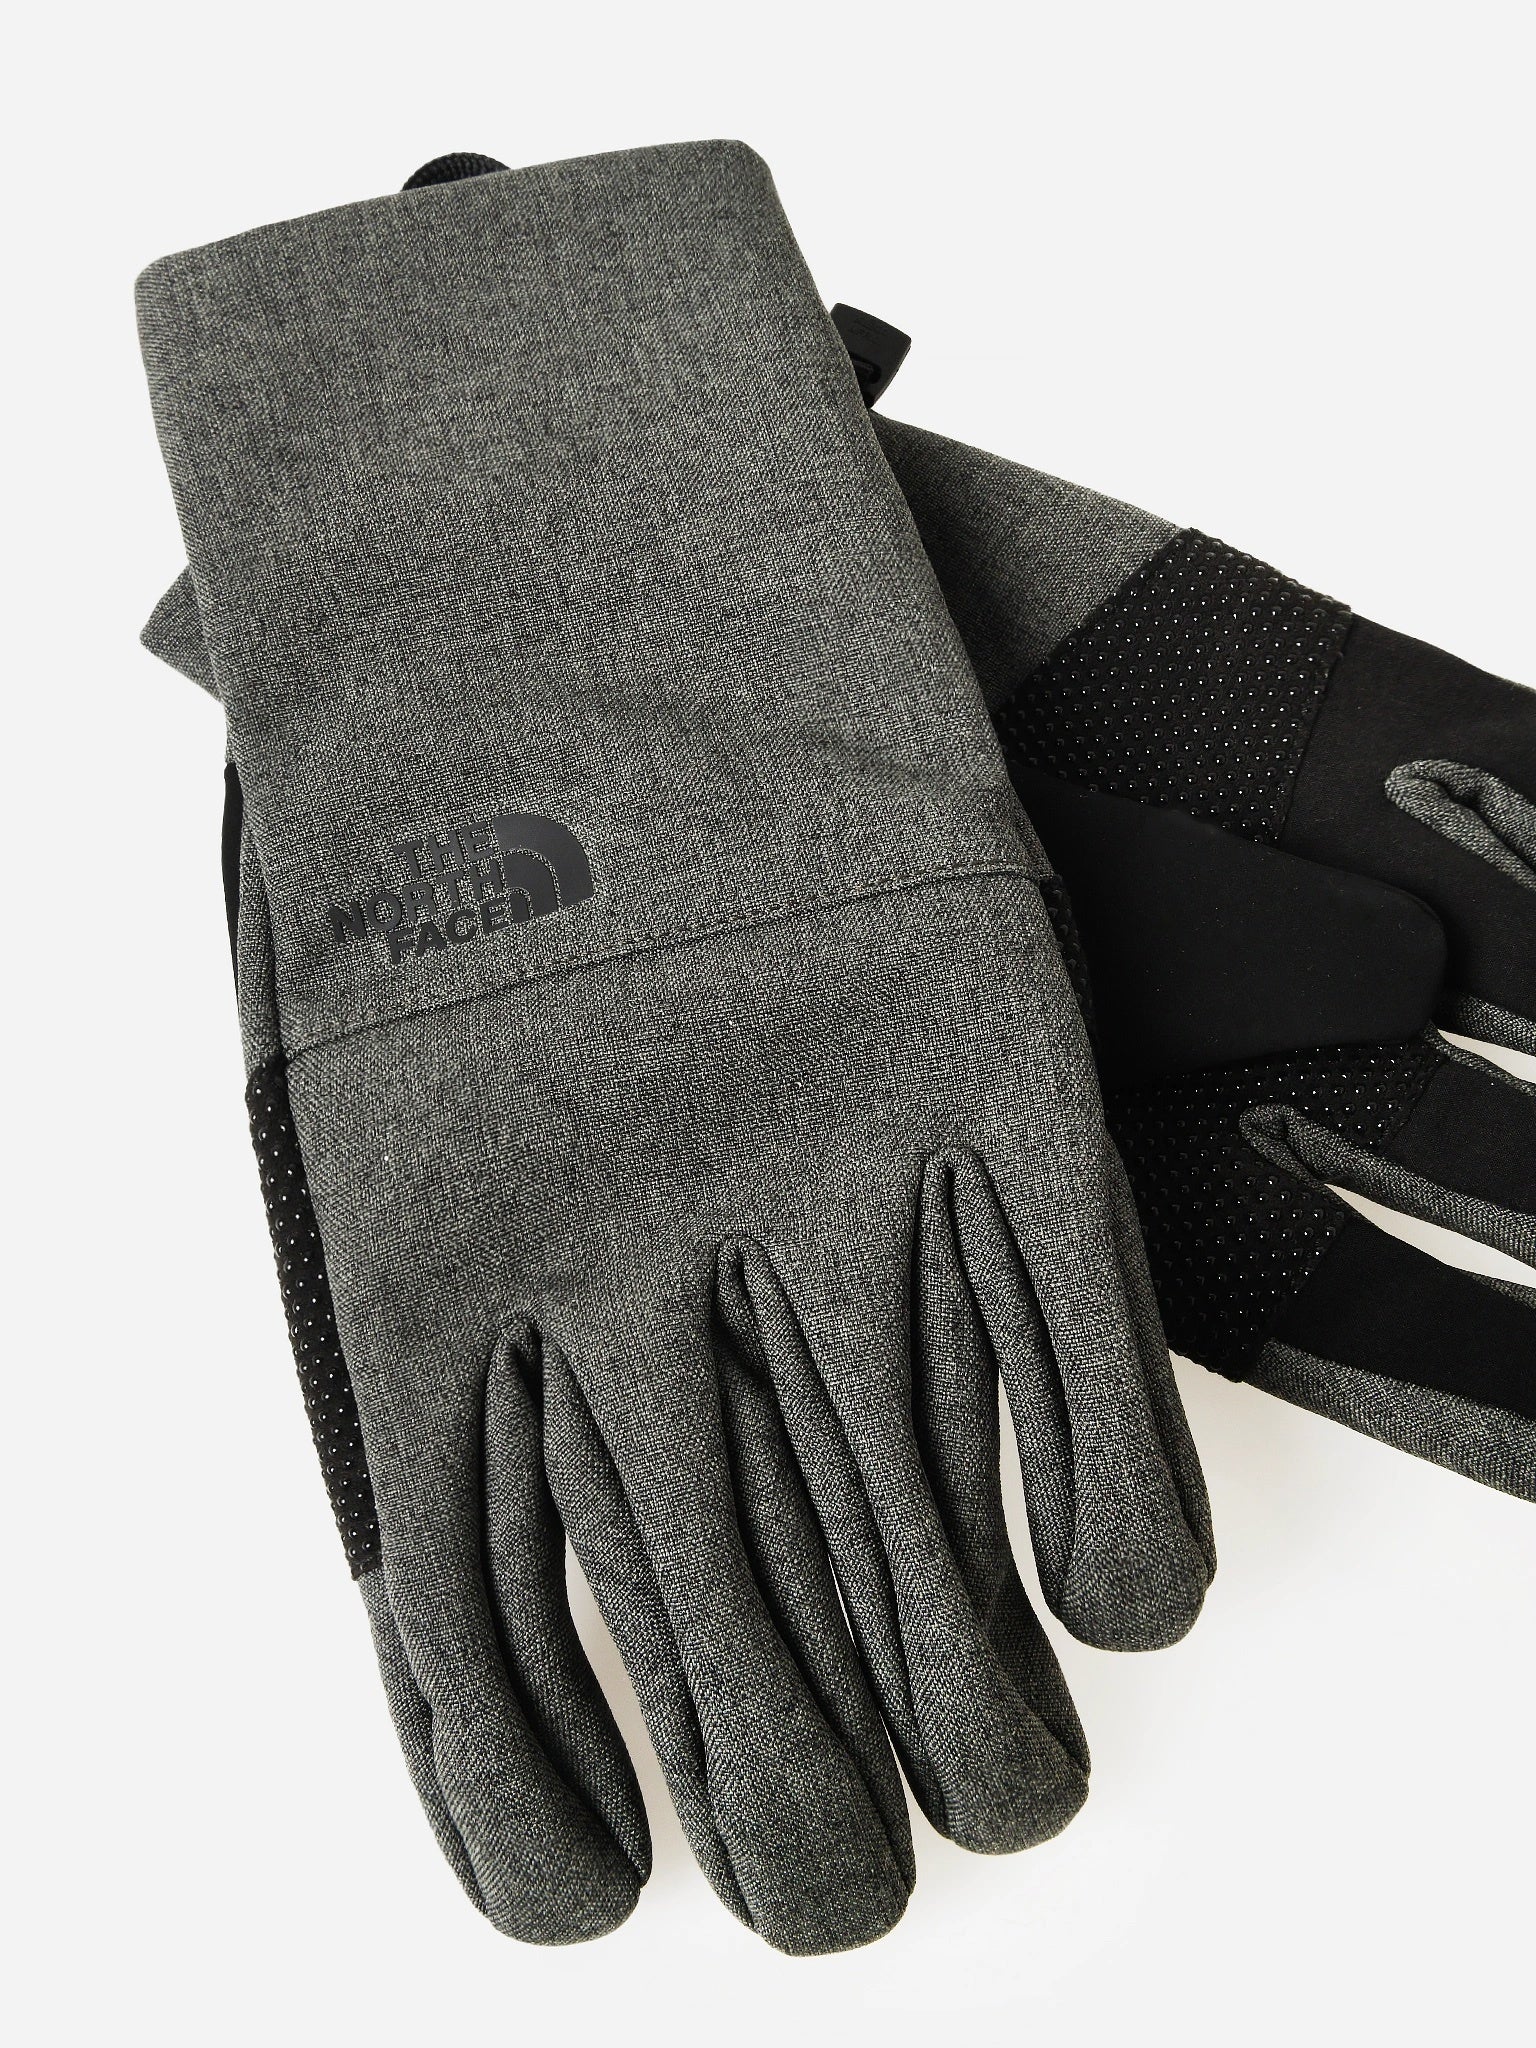 Bloeien Gestaag Verzadigen The North Face Men's Apex Etip™ Glove - Saint Bernard